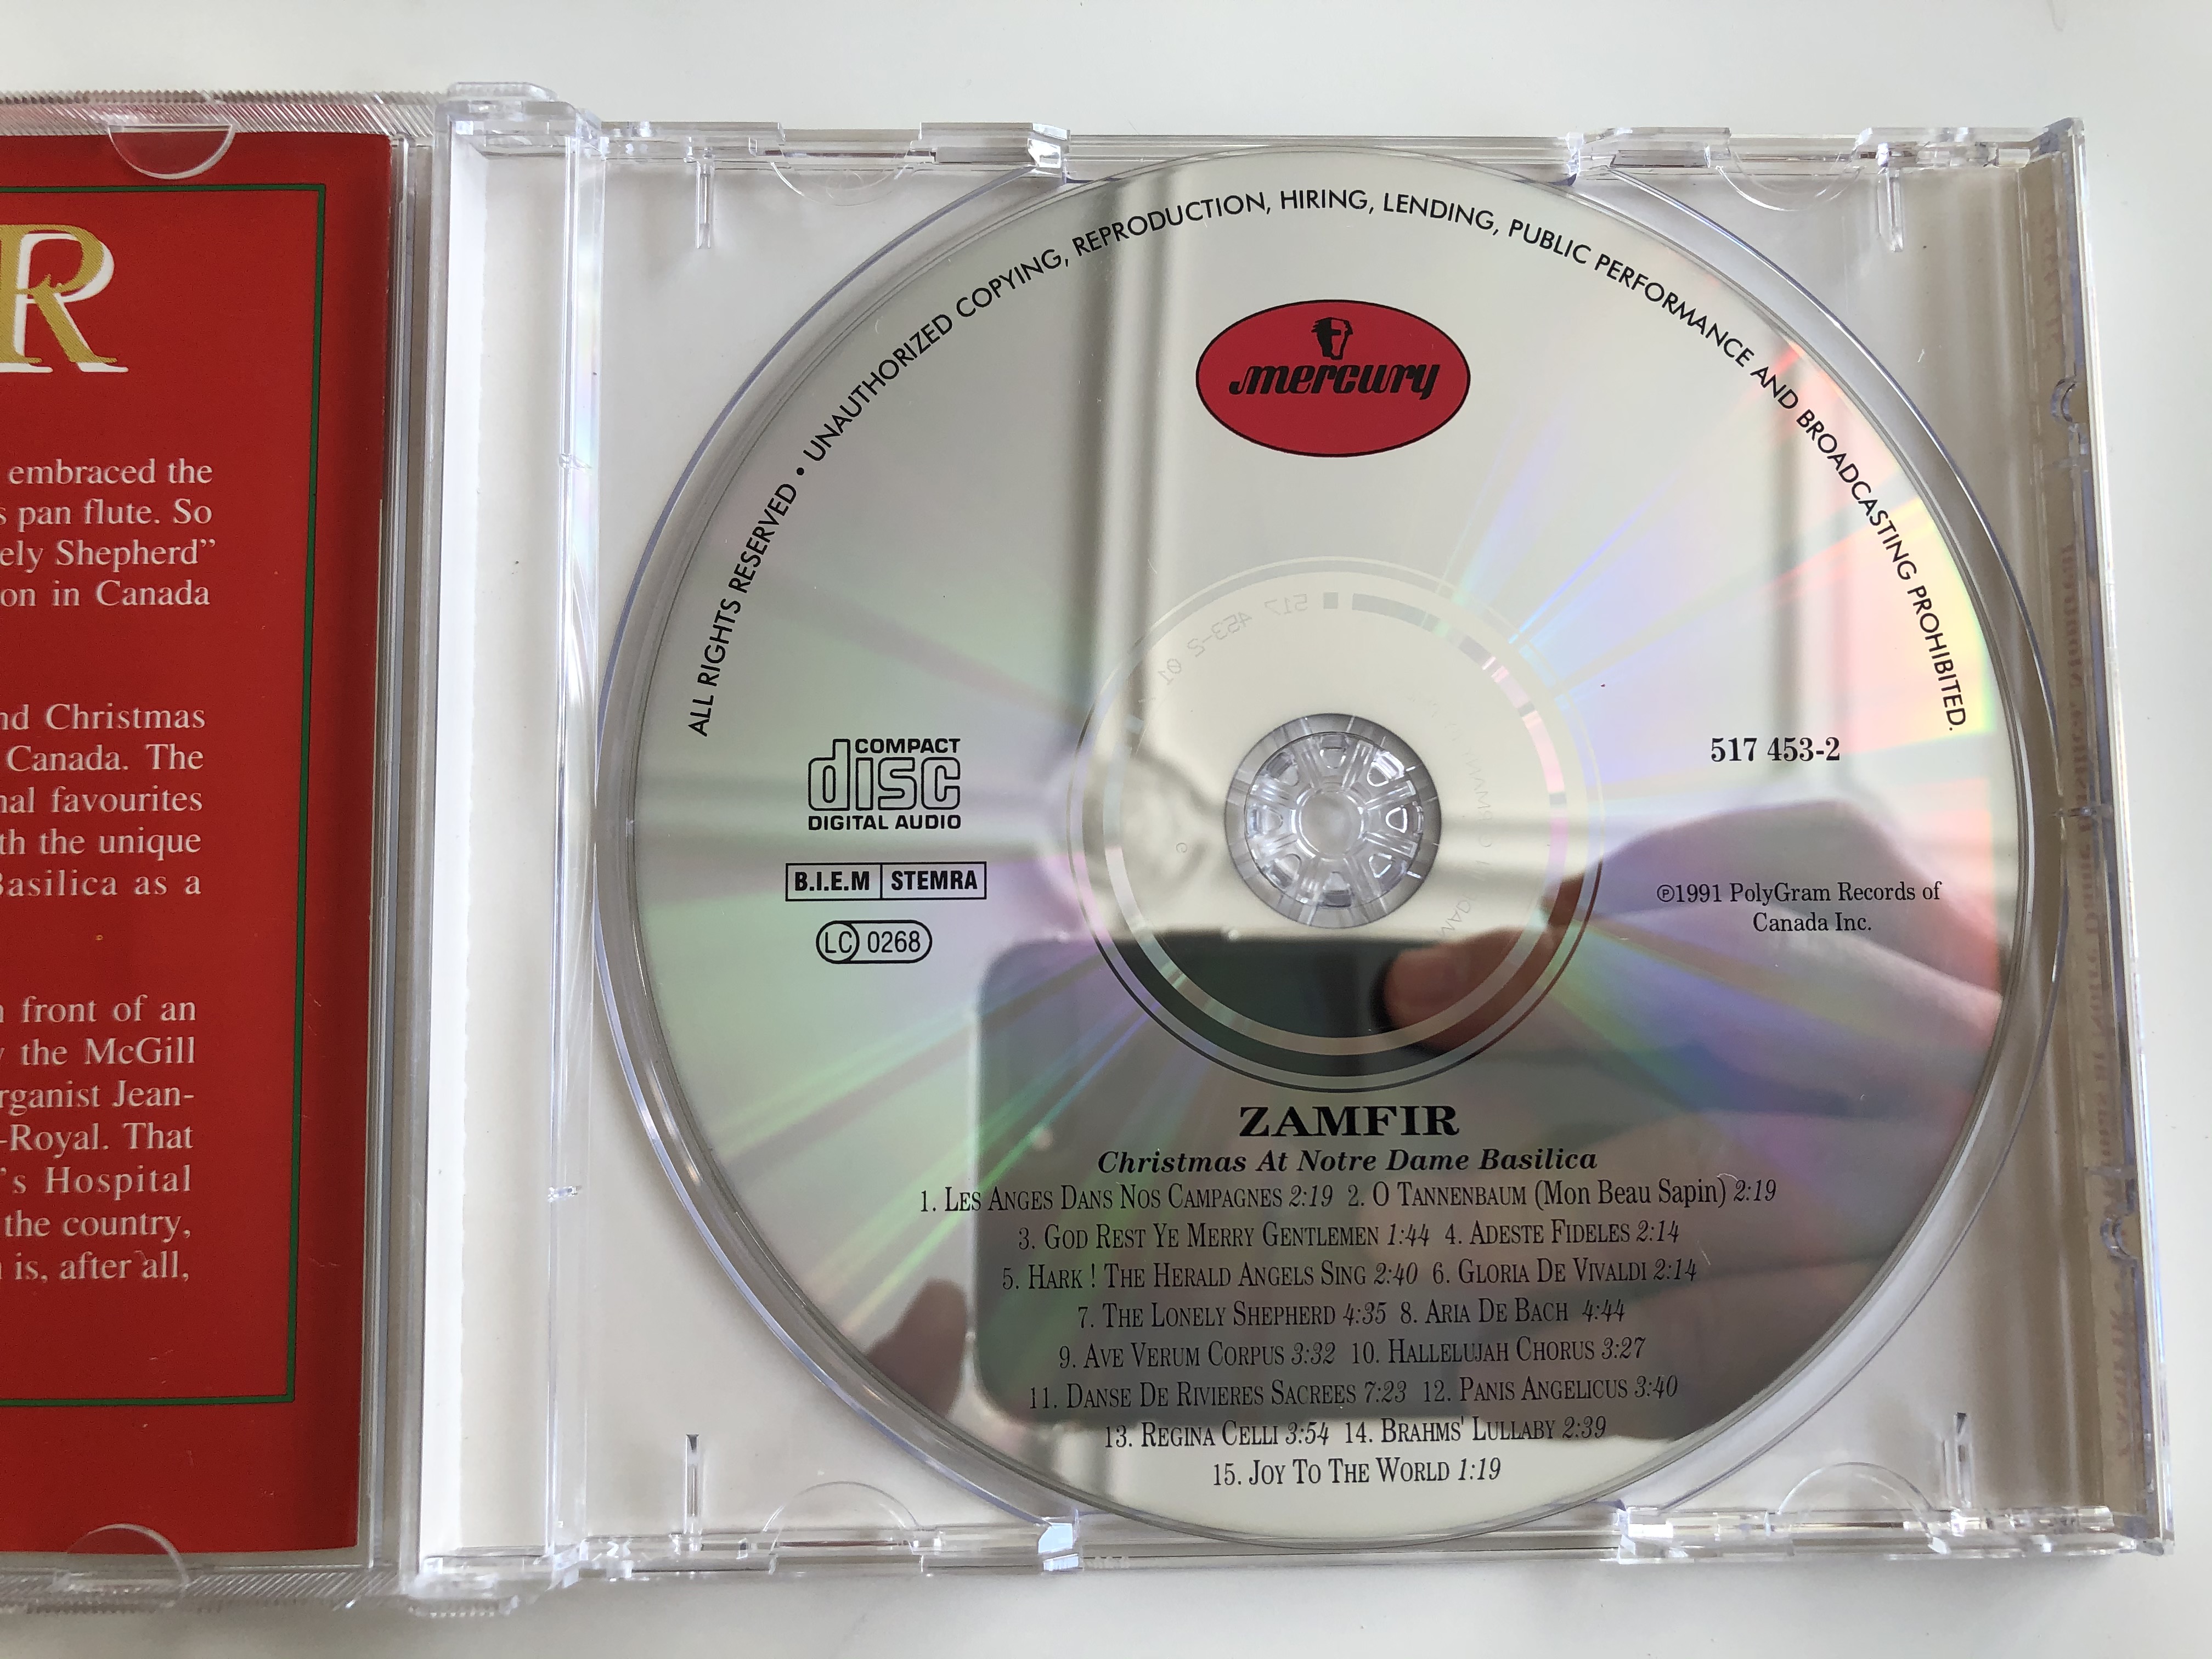 zamfir-christmas-at-notre-dame-basilica-montreal-mercury-audio-cd-1991-517-453-2-4-.jpg